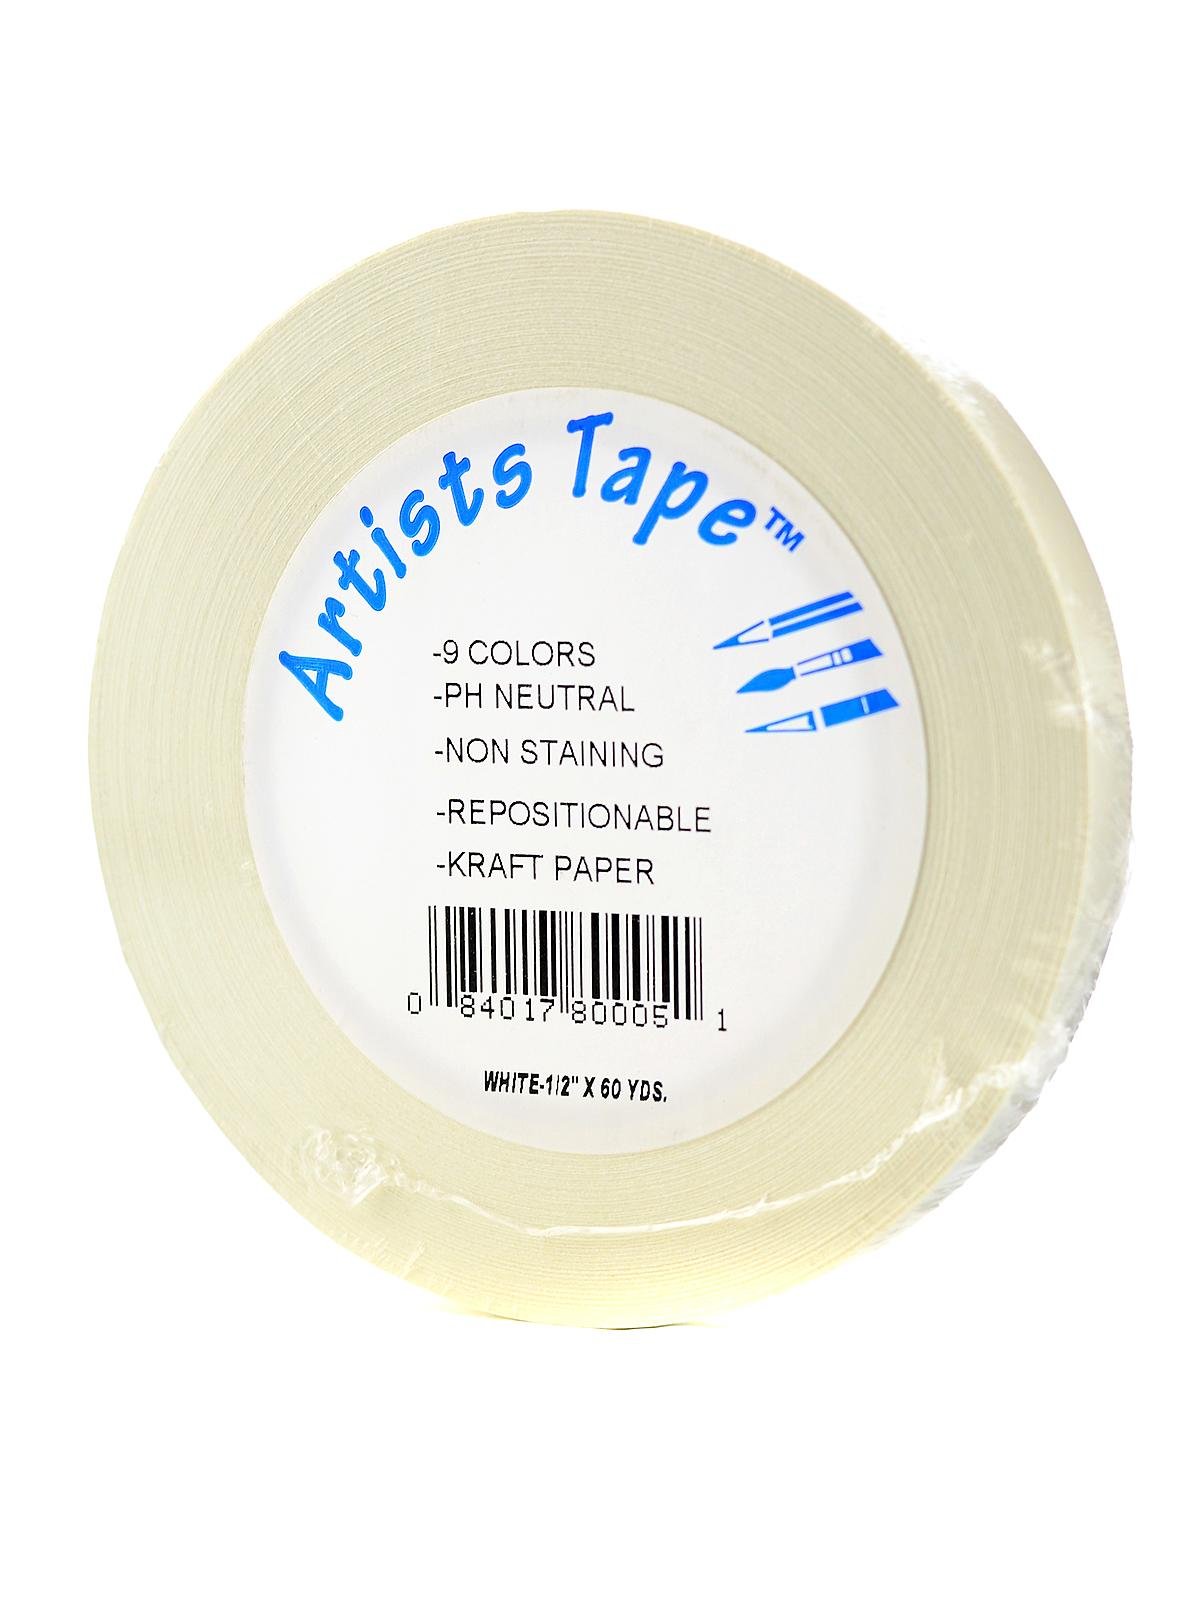 ALLFUN 4 Pack White Artist Tape, Art Masking Artist Tape for Watercolor Painting Drafting Canvas Framing, Acid Free Low Tack Masking